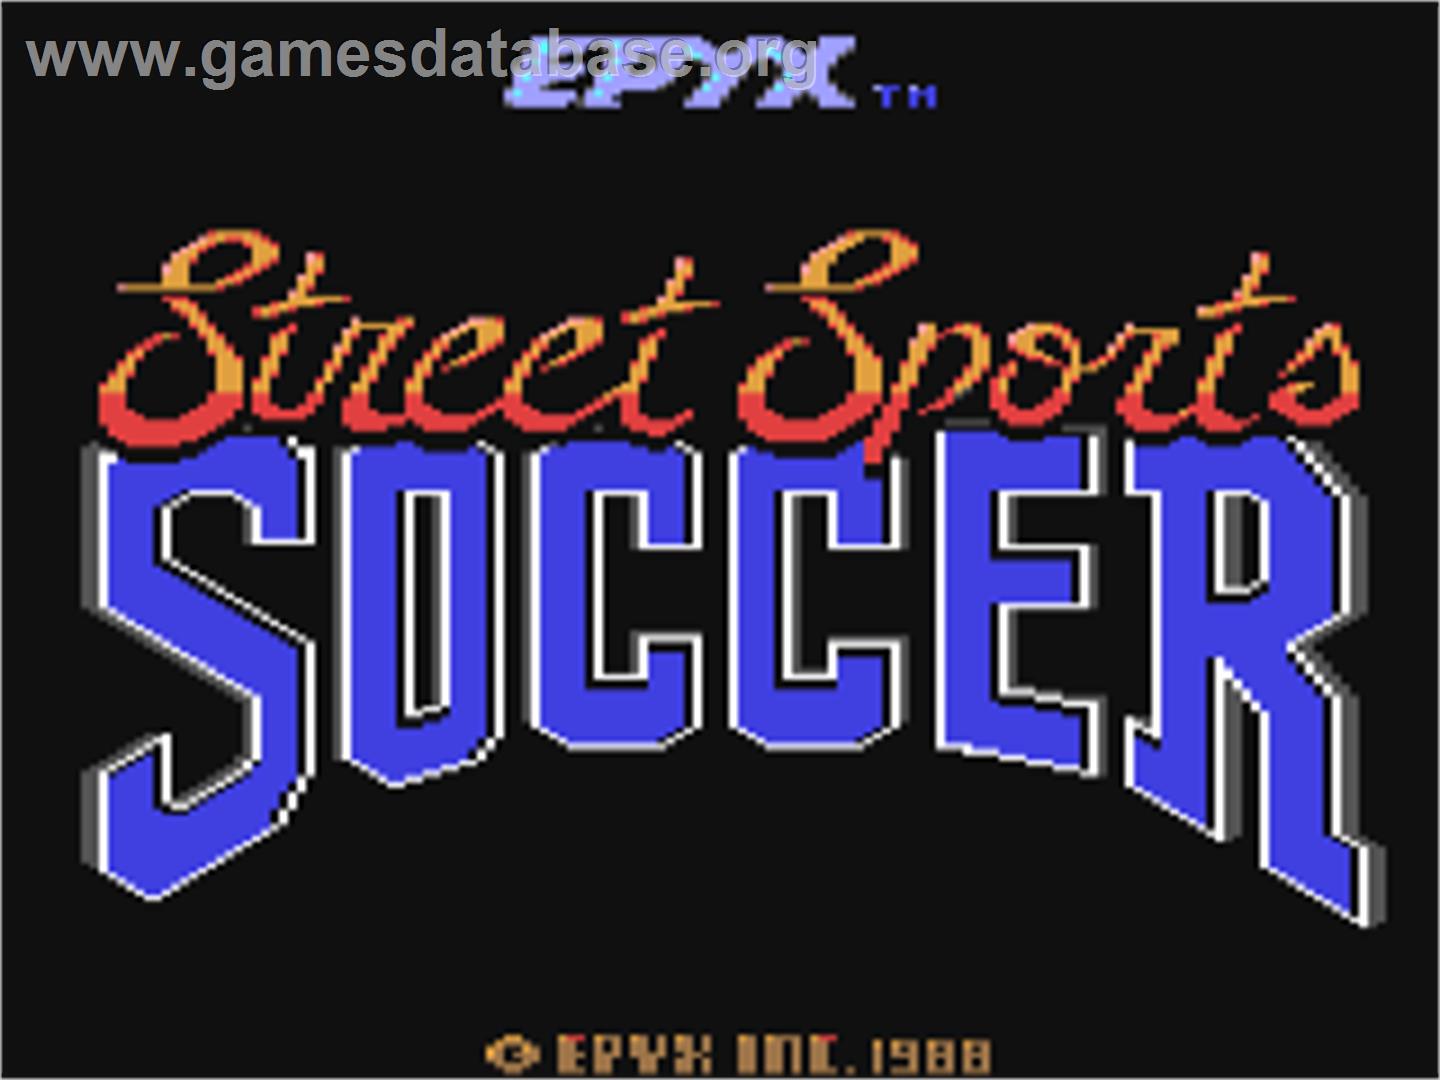 Street Sports Soccer - Commodore 64 - Artwork - Title Screen